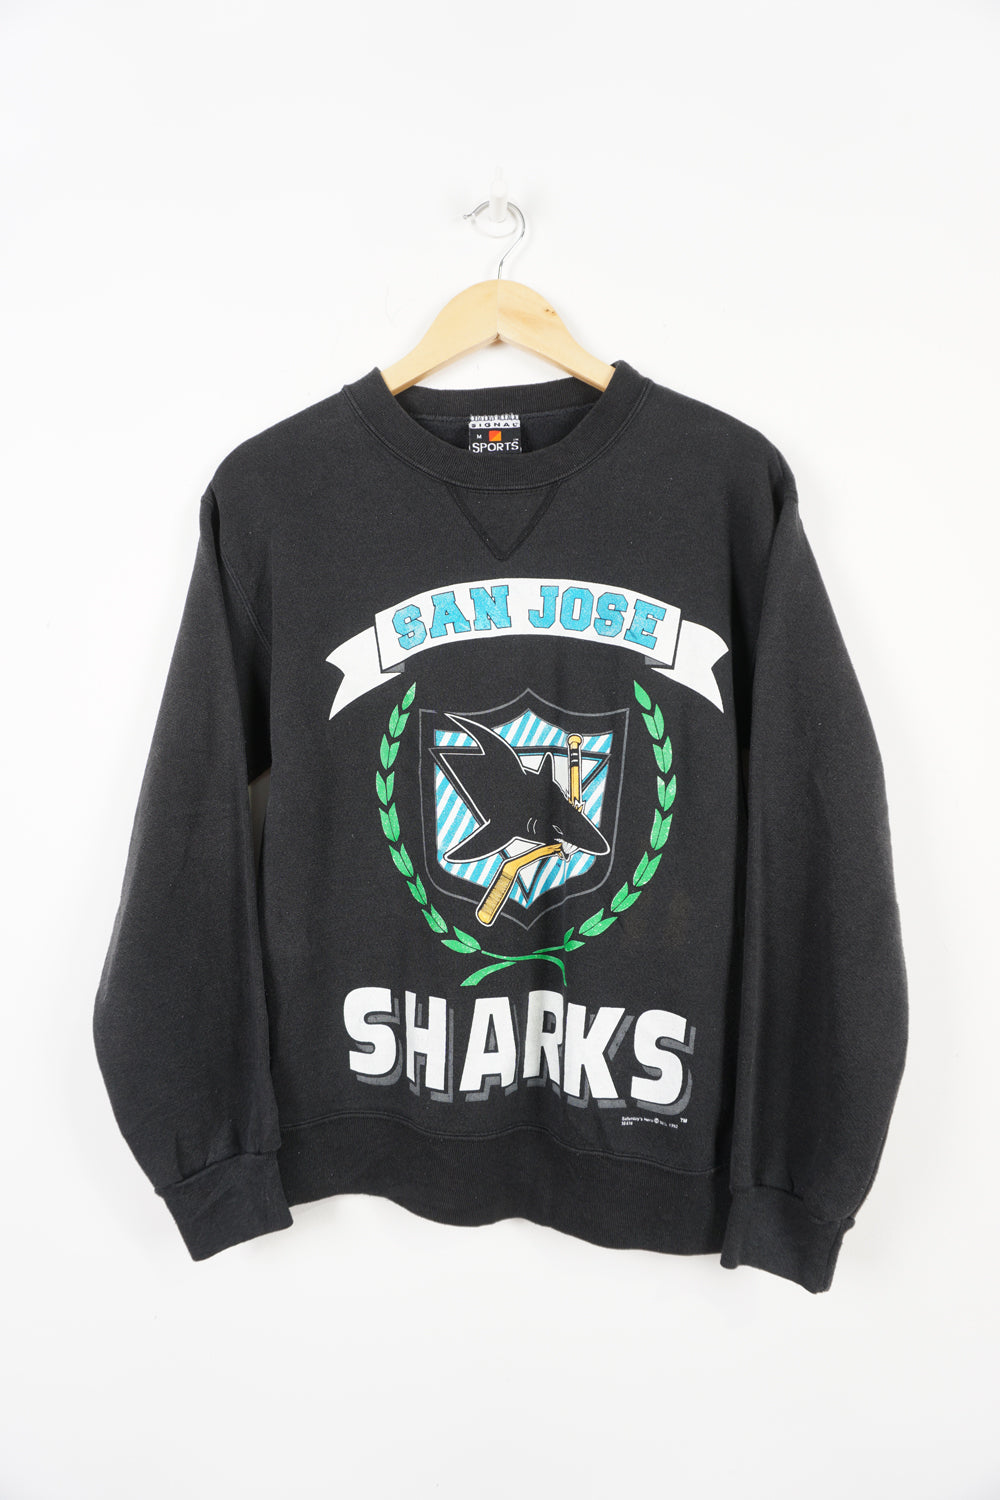 1991 San Jose Sharks Crewneck Sweater NHL Hockey USA VTG 90s 